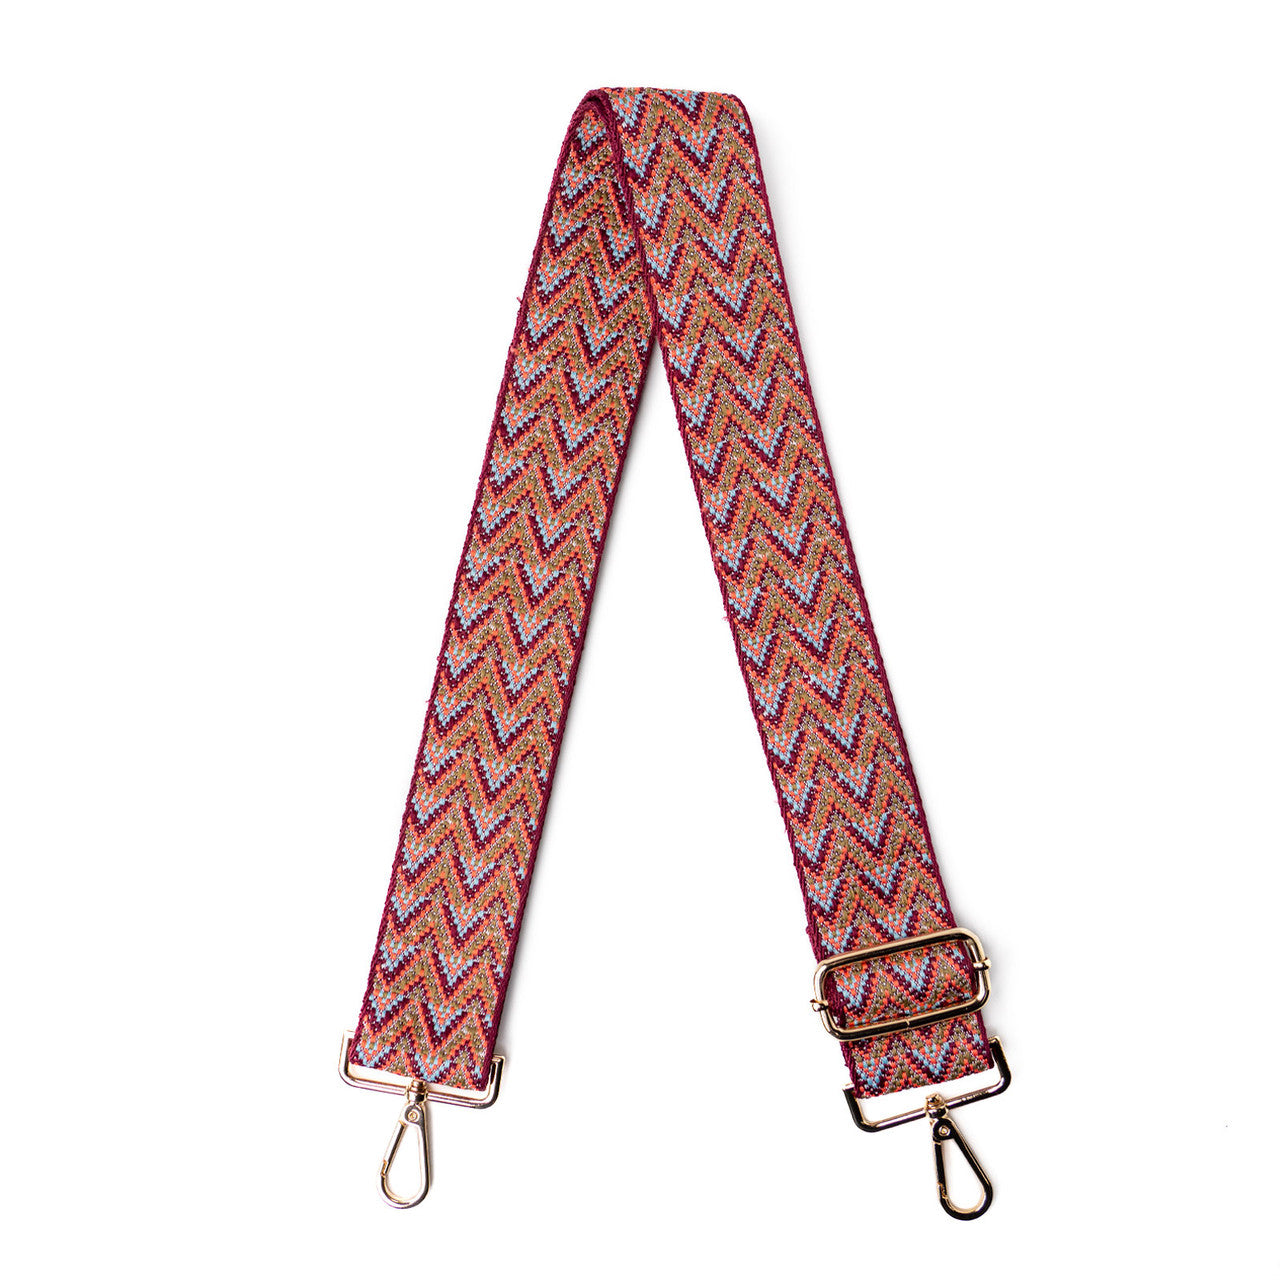 Embroidered Interchangable Bag Straps